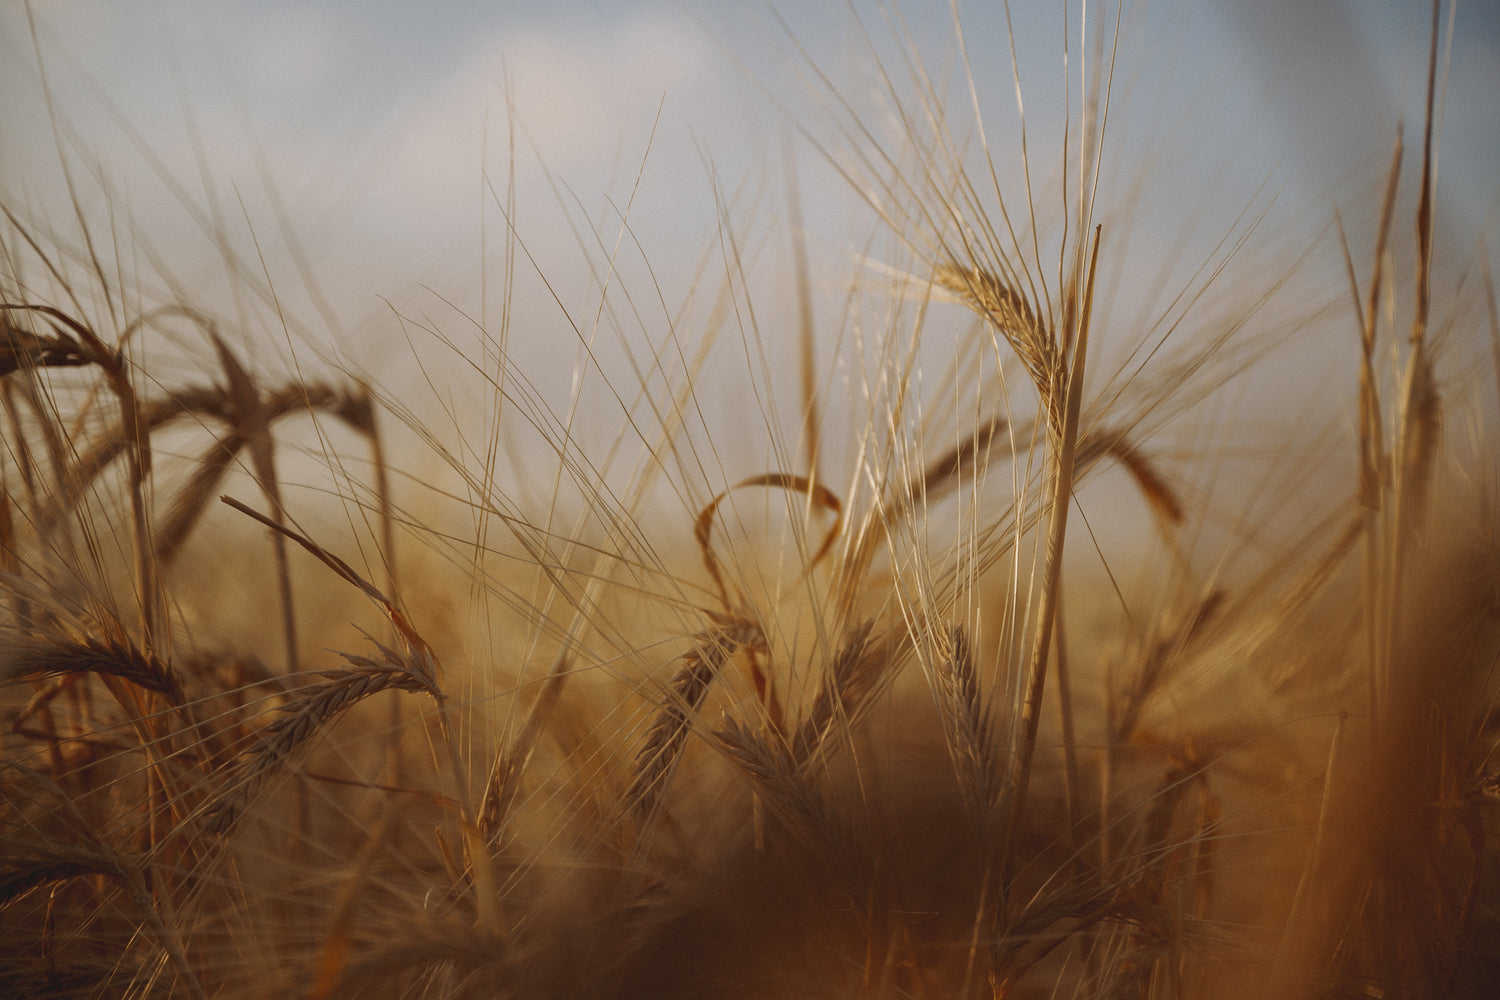 A close up of golden barley